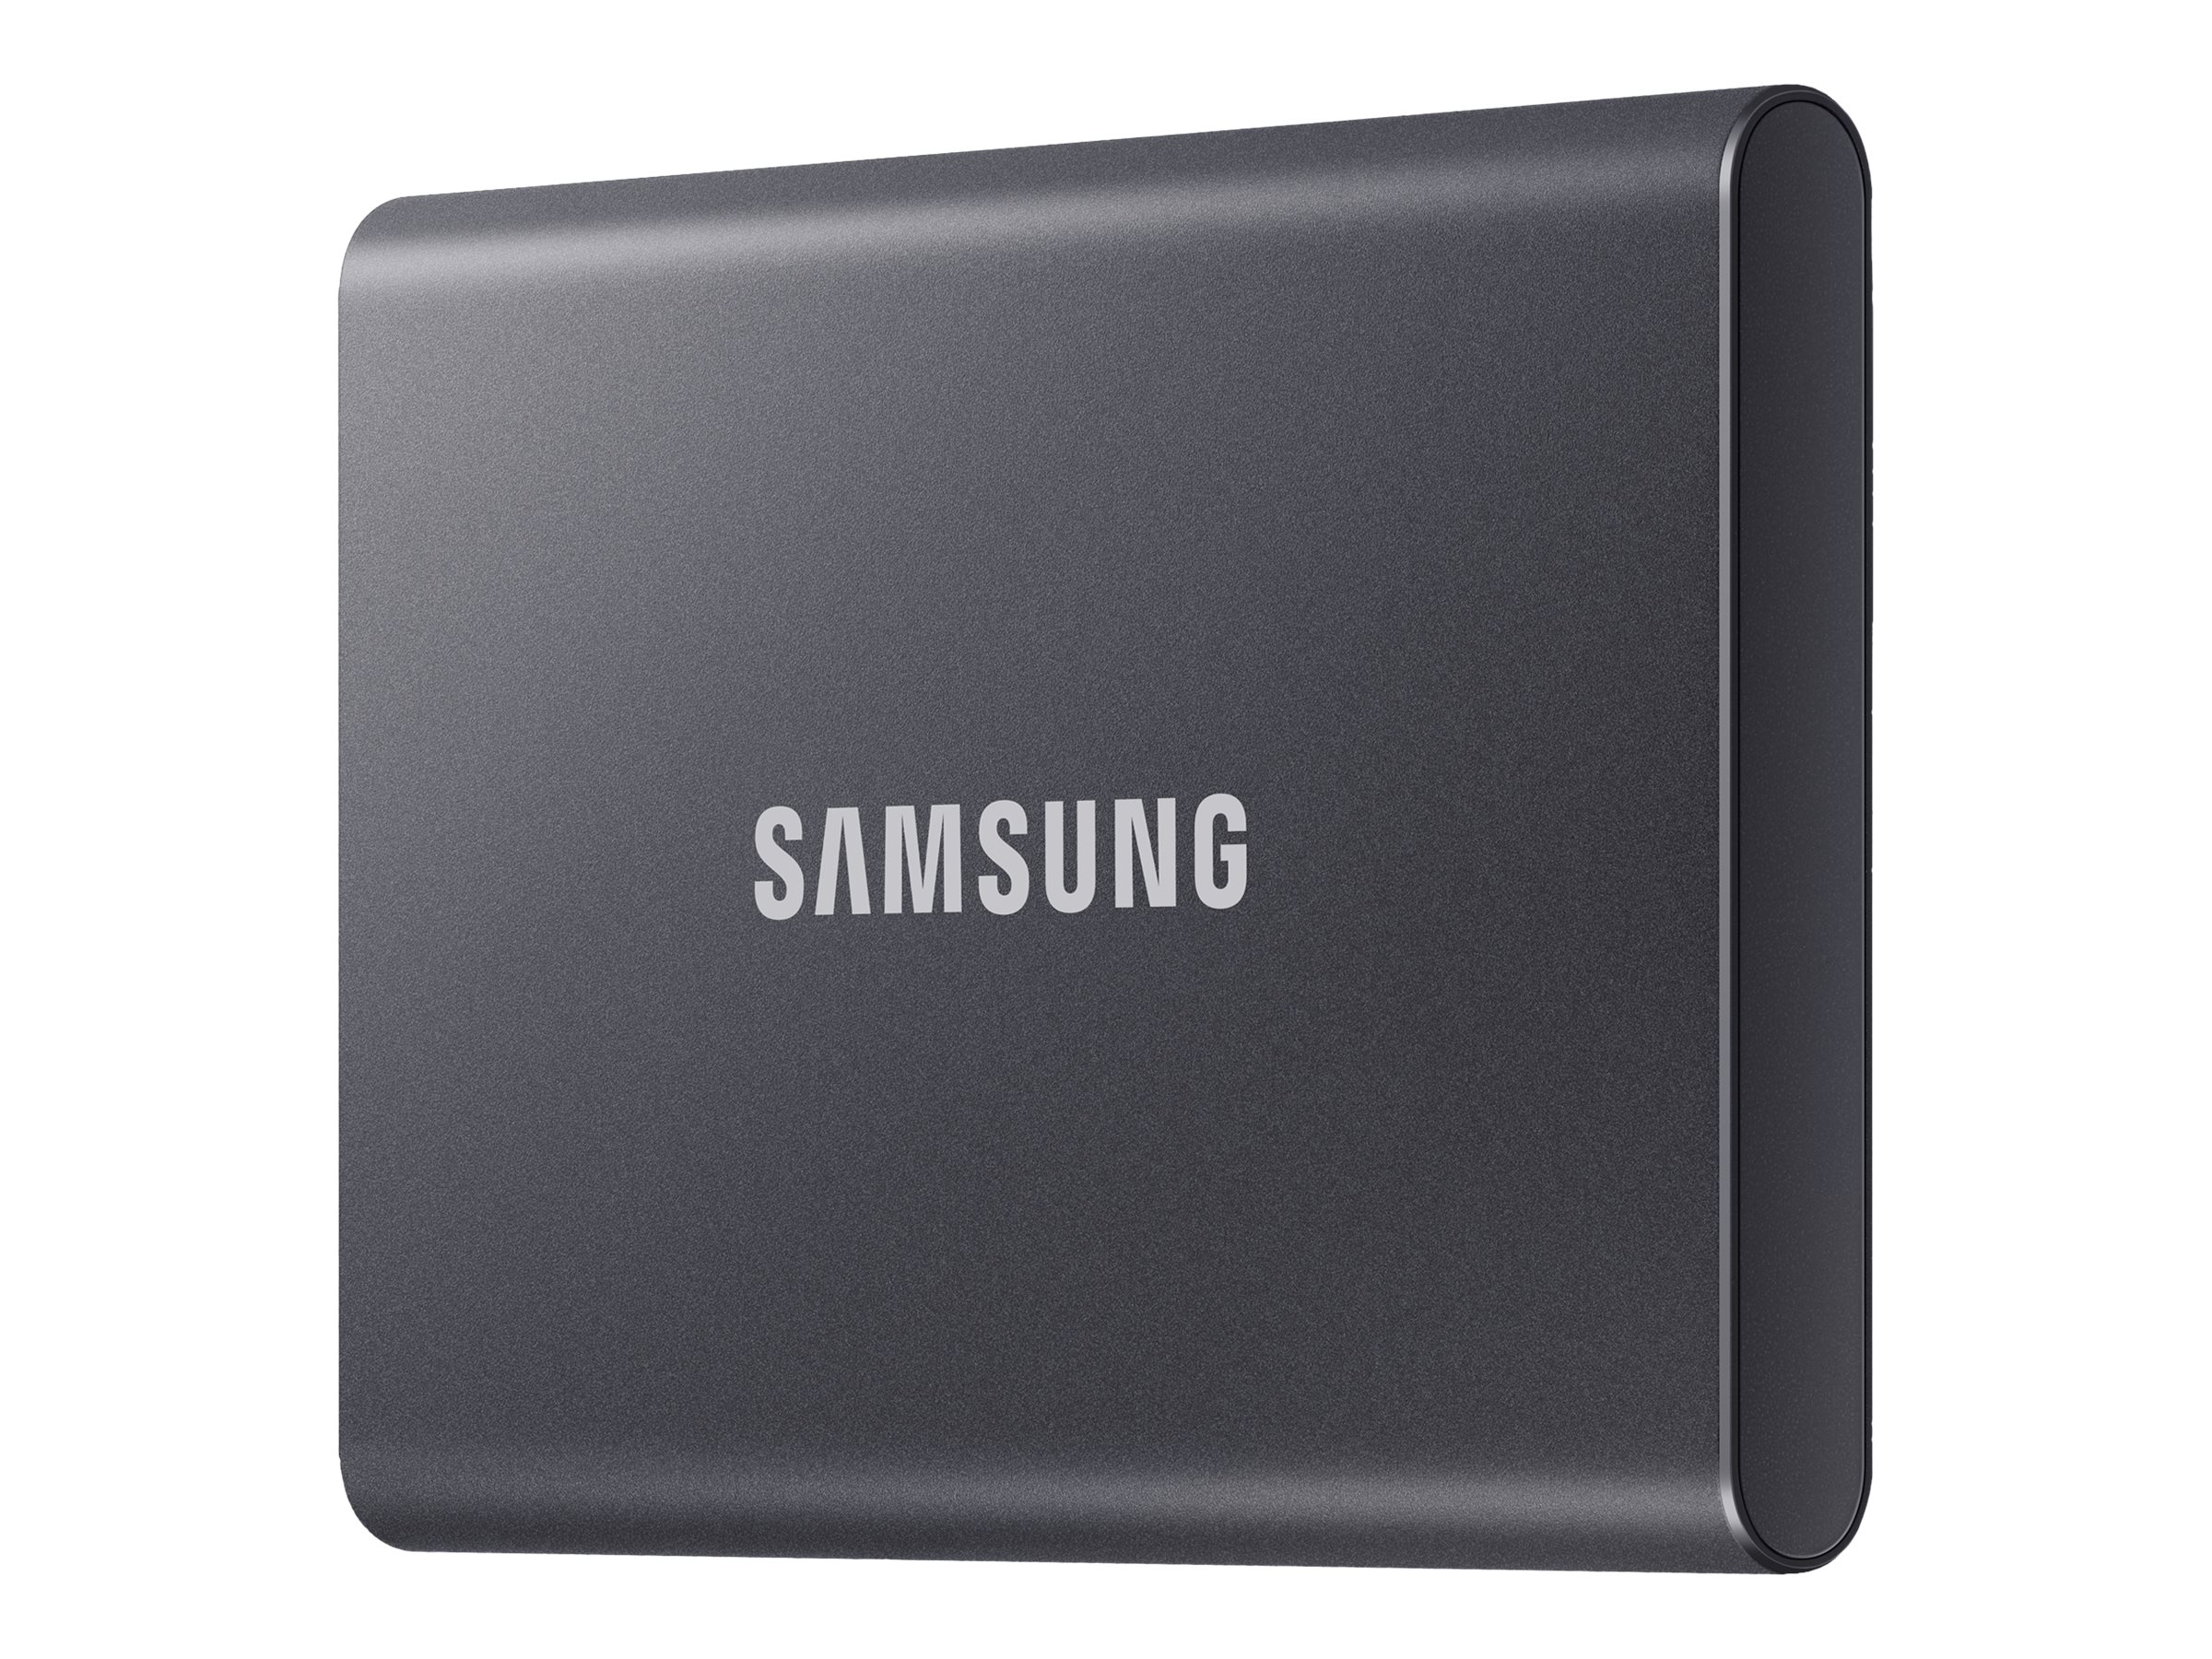 SAMSUNG SSD PORTABLE T7 500GB indigo titan grey